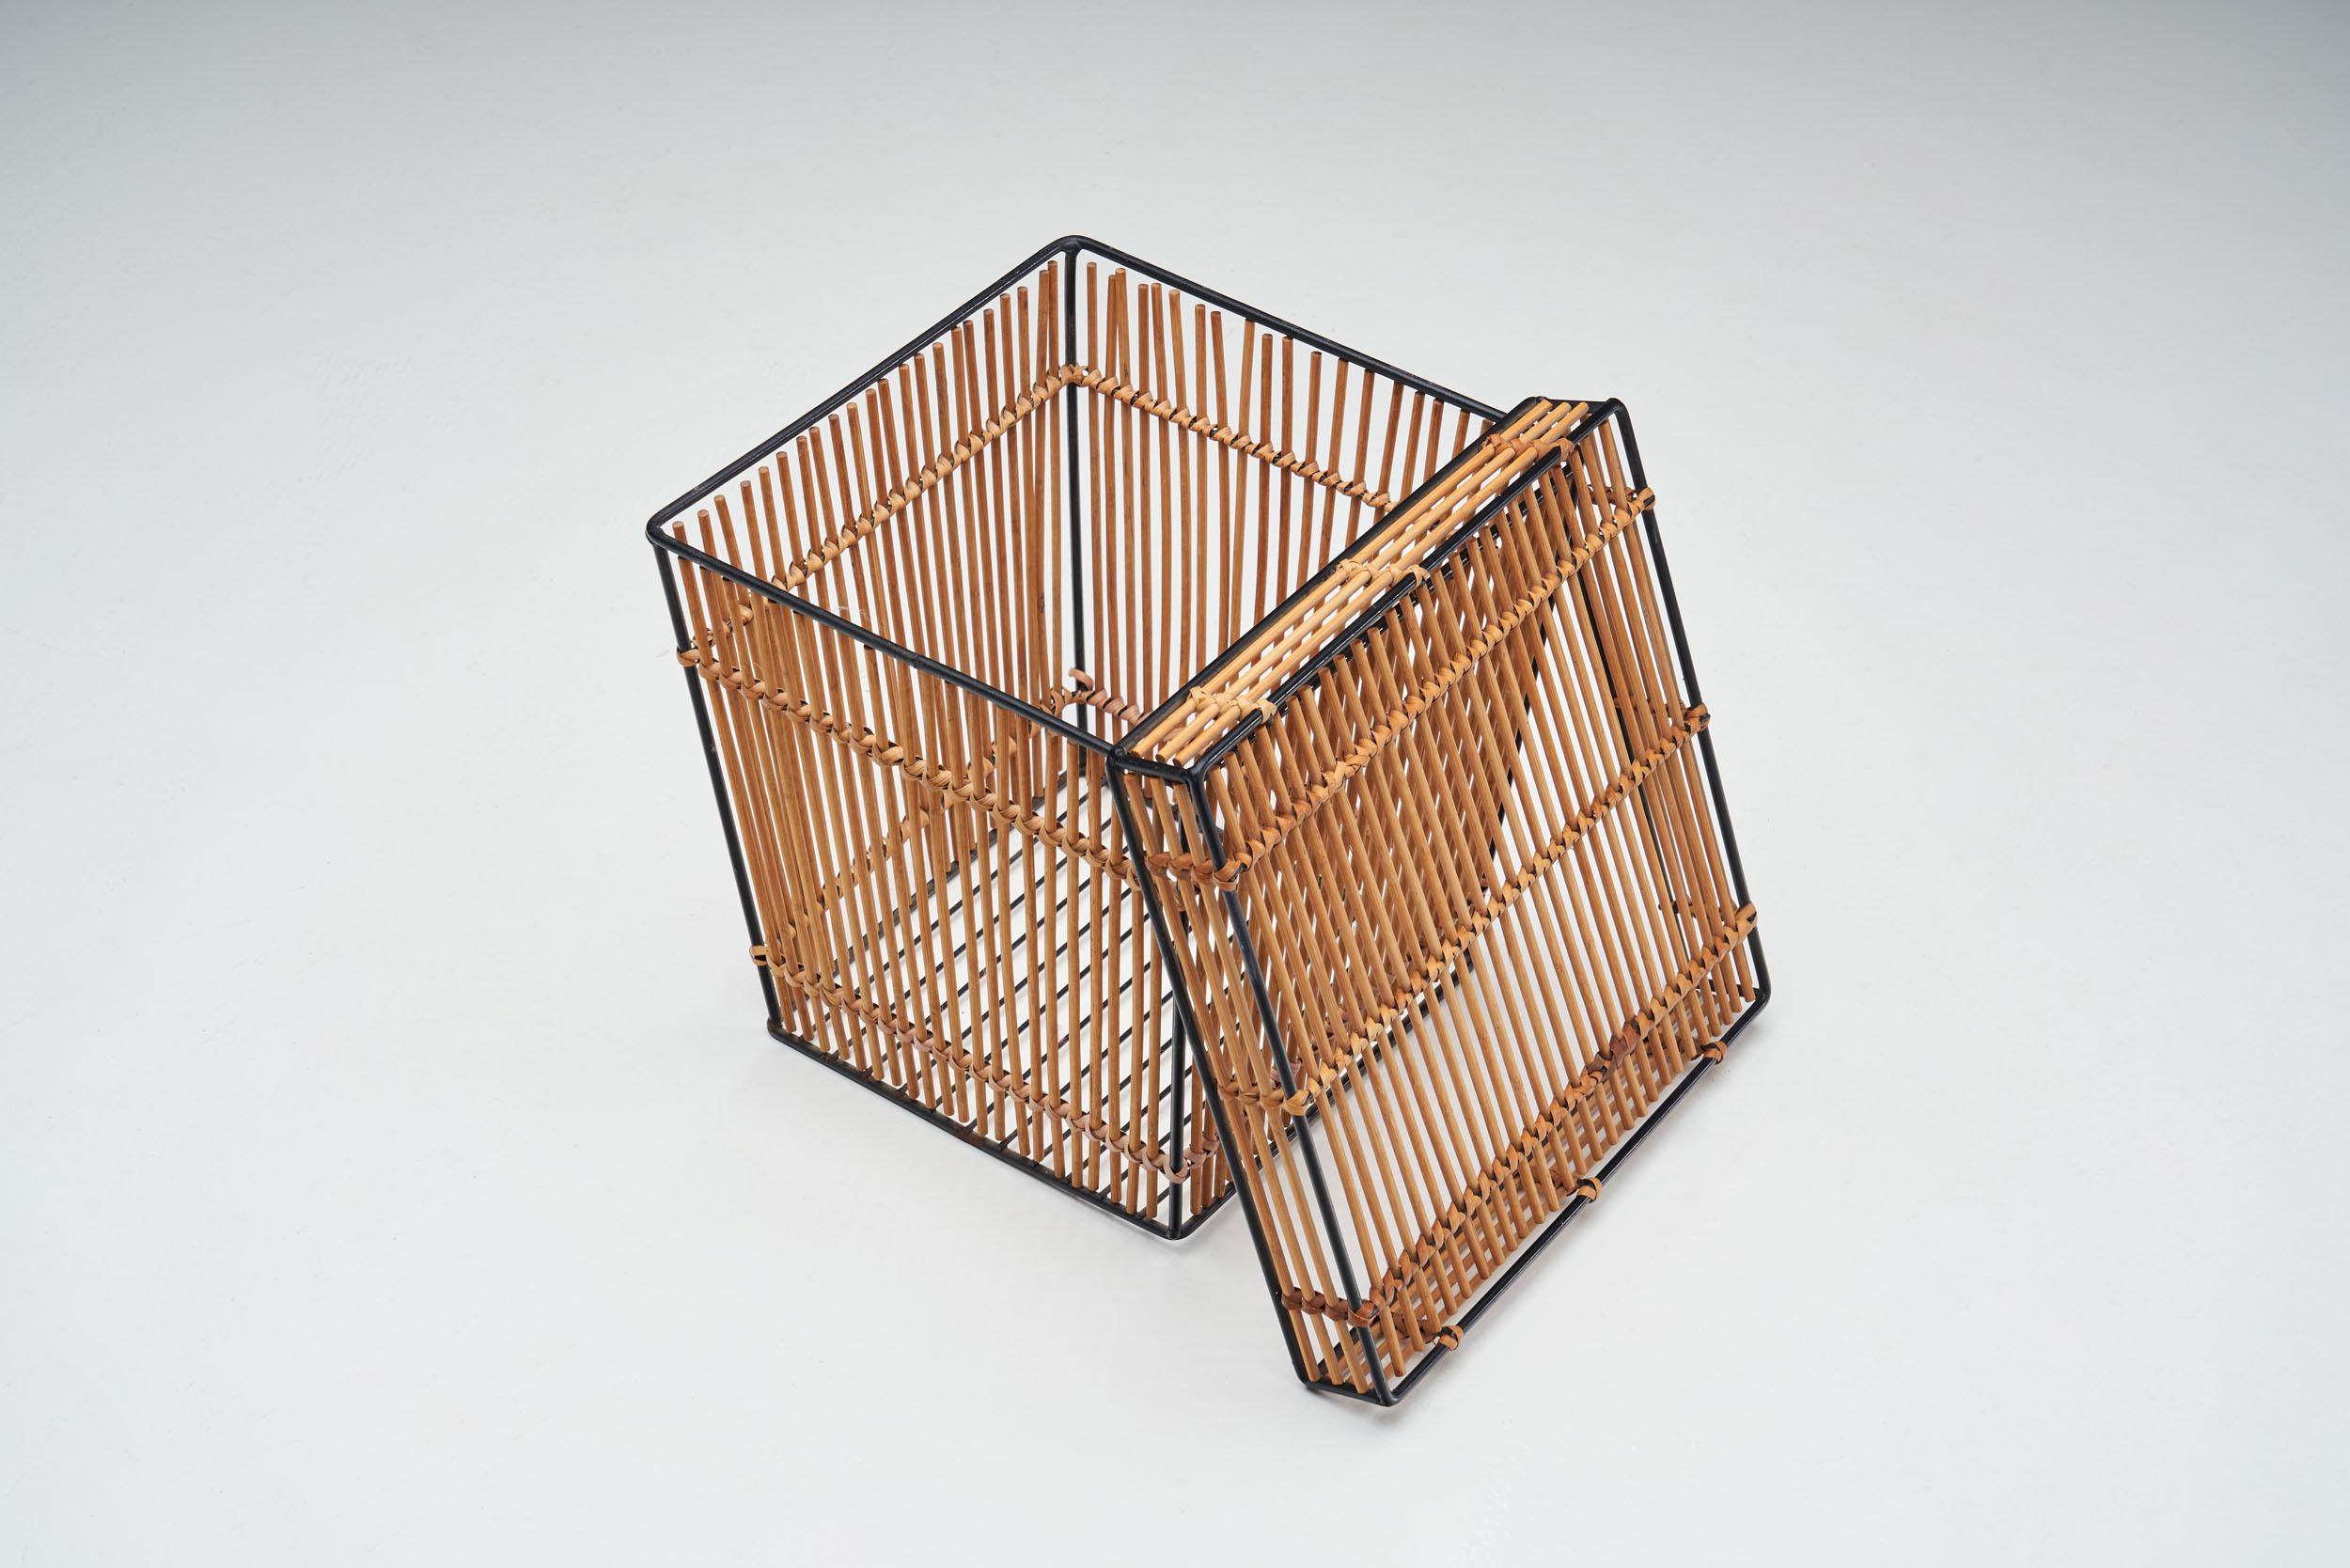 Steel Four Storage Baskets by Dirk Van Sliedregt 'Attr.' for Rohé, Netherlands, 1960s For Sale